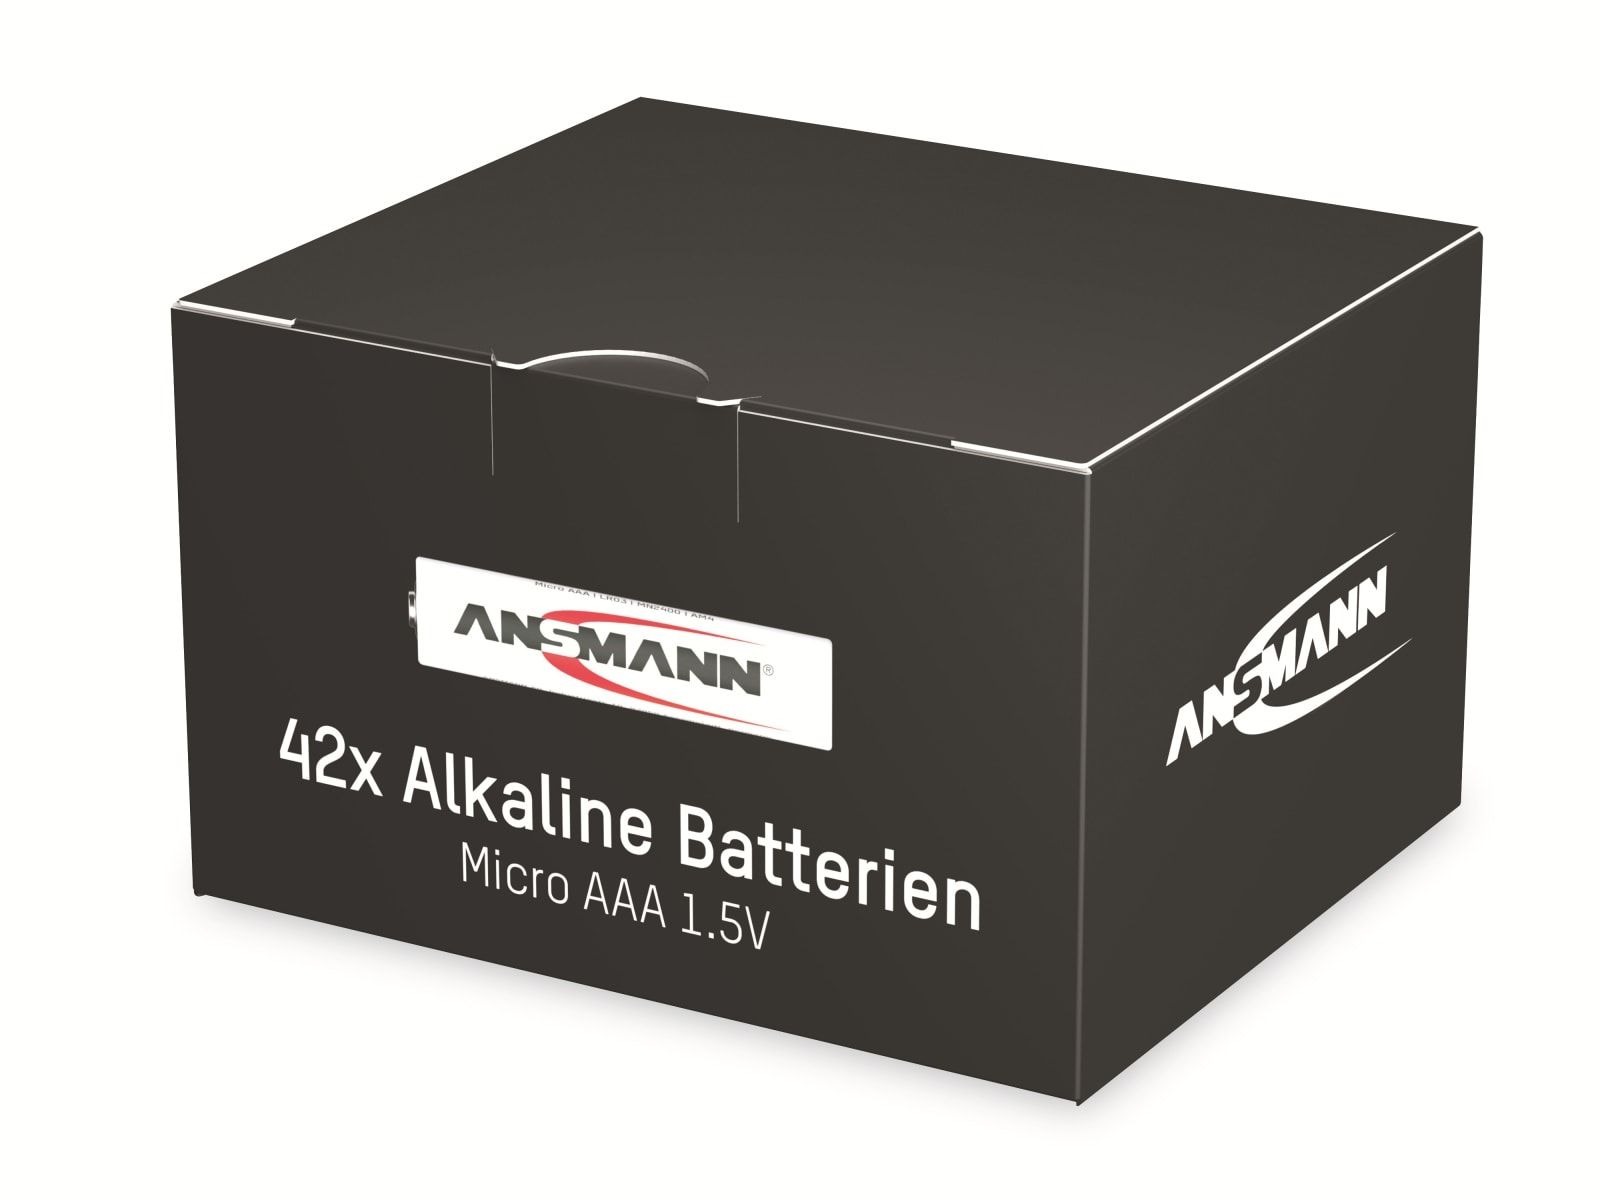 Micro-Batterie-Set, 42 Stück Alkaline ANSMANN Alkaline, Batterien